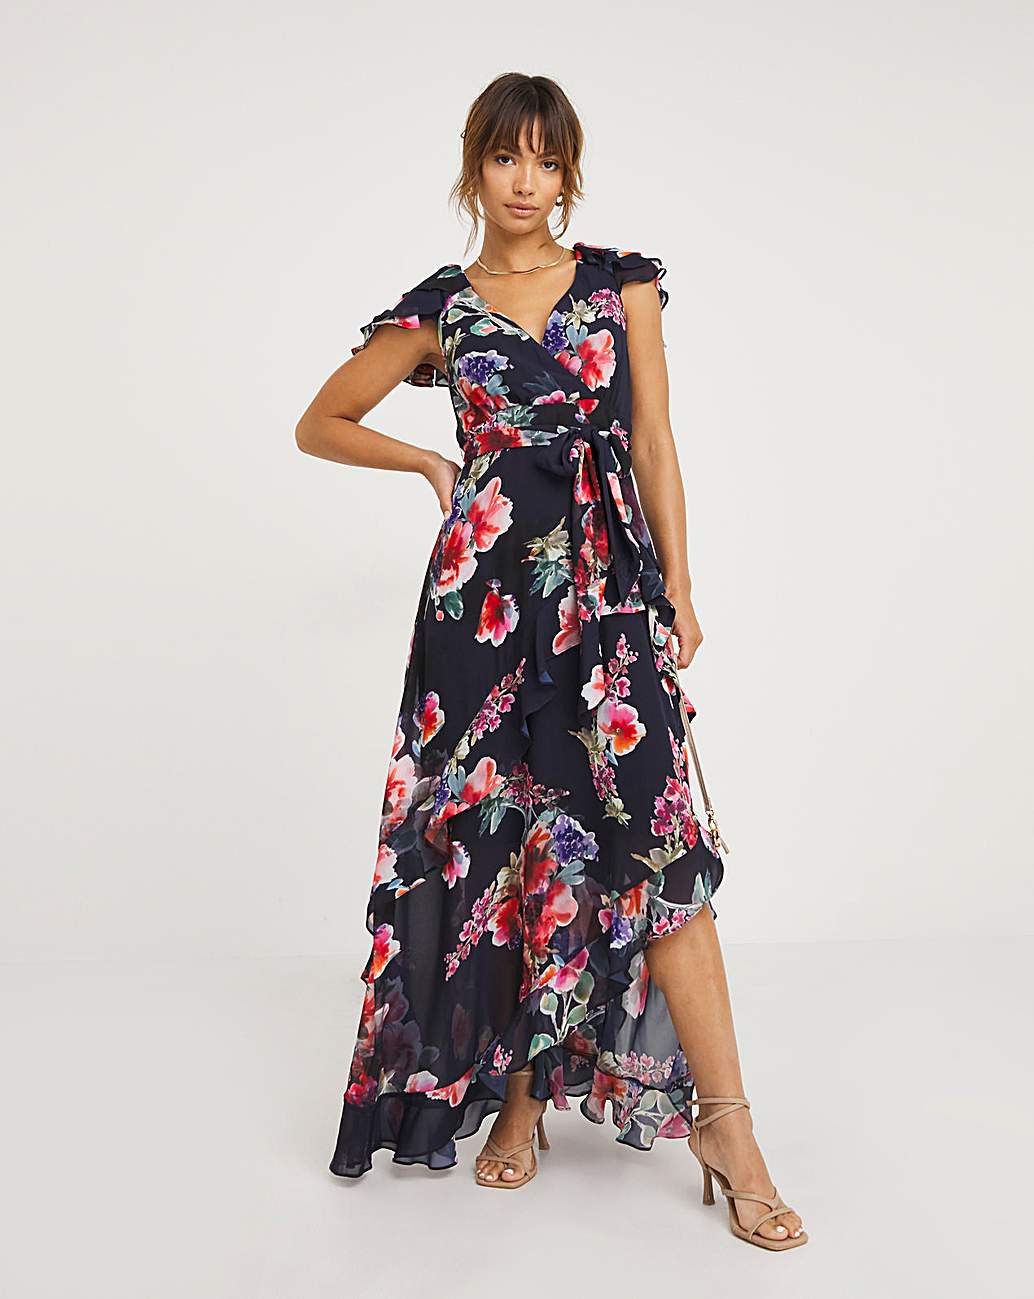 Joanna Hope Maxi Dress Size 12 Womens A Line Floral Sleeveless NEW